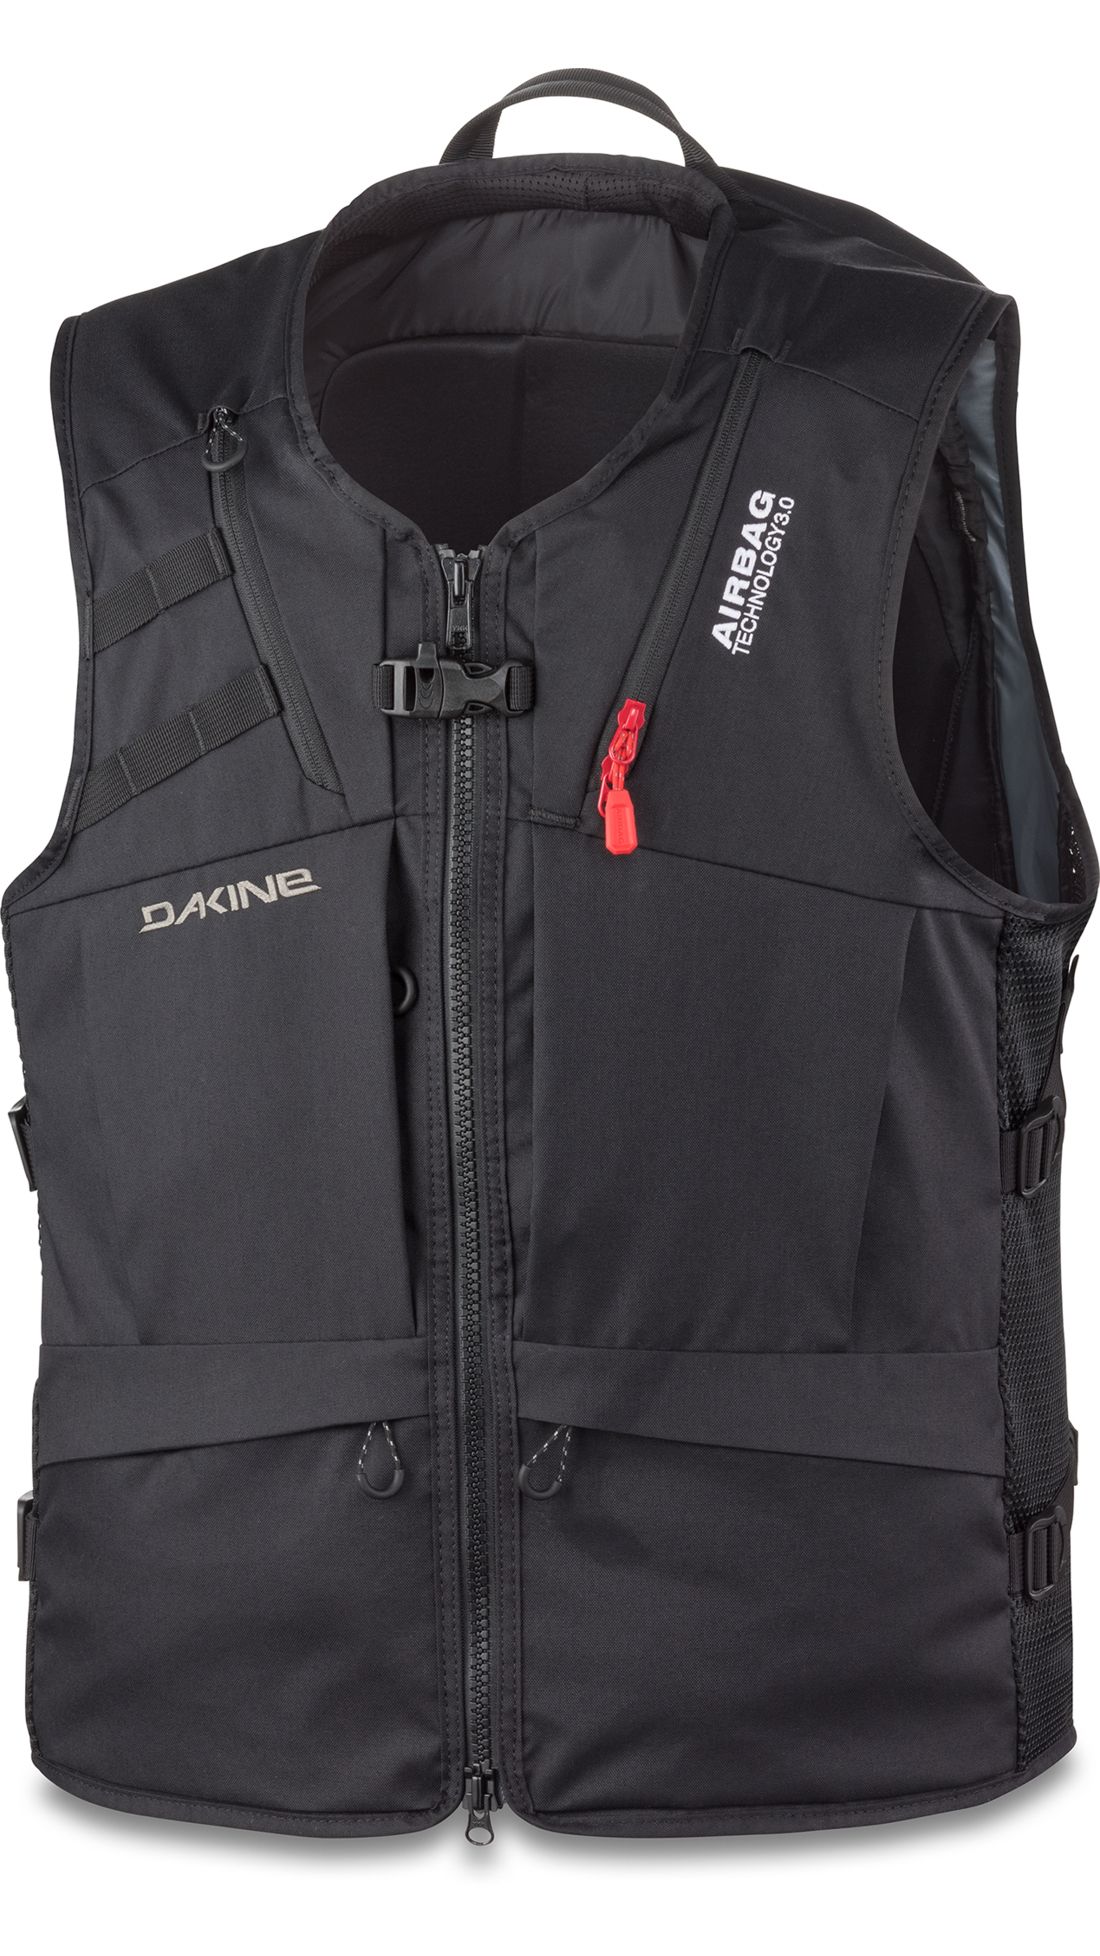 Dakine Poacher RAS Vest - Avalanche airbag backpack